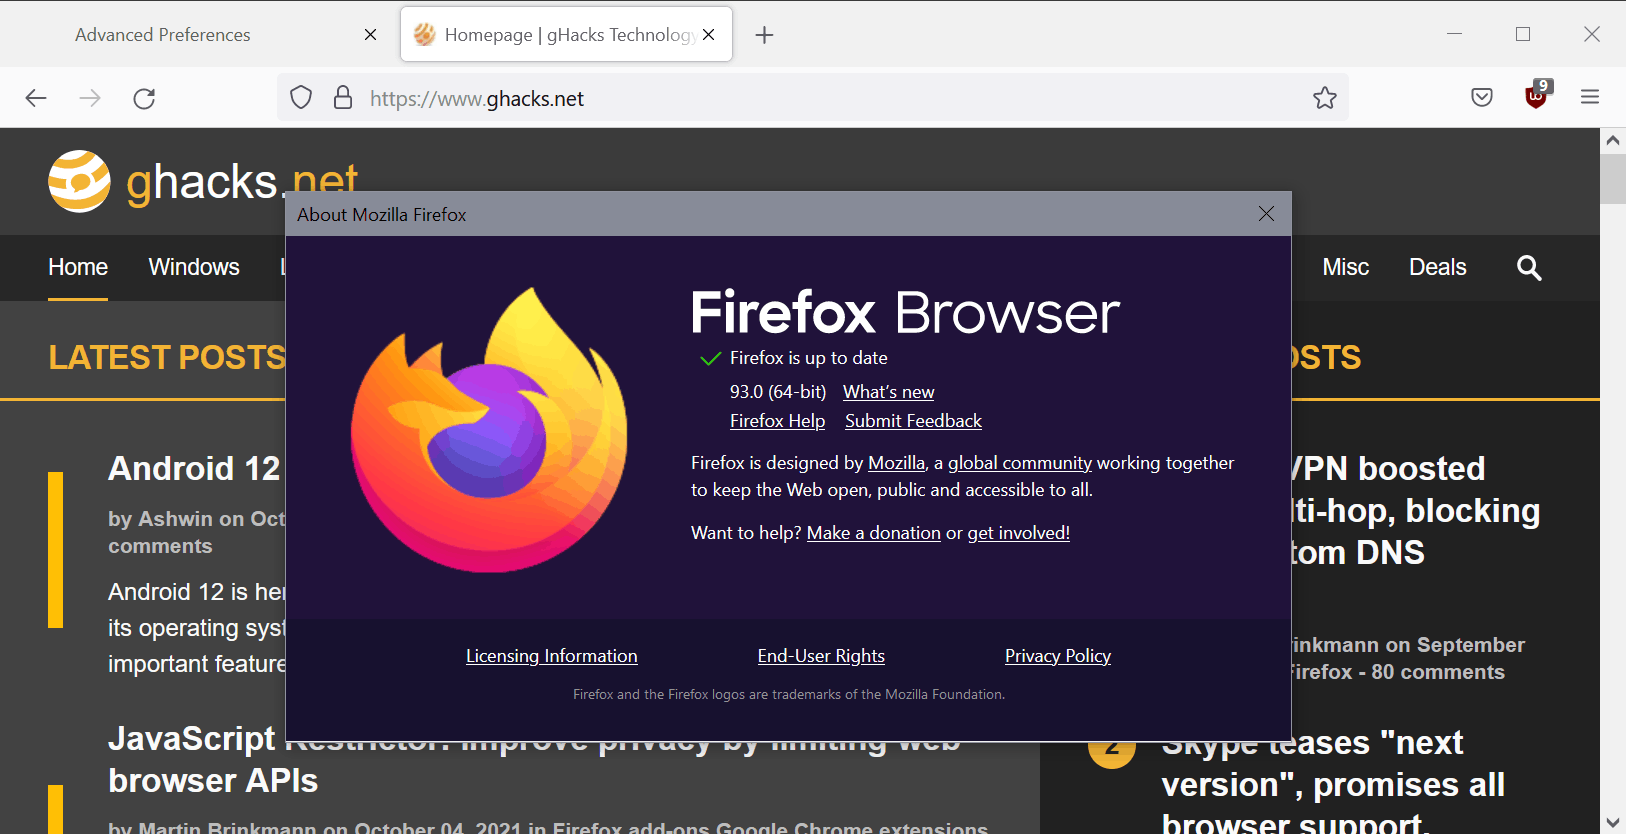 firefox download windows 7 64